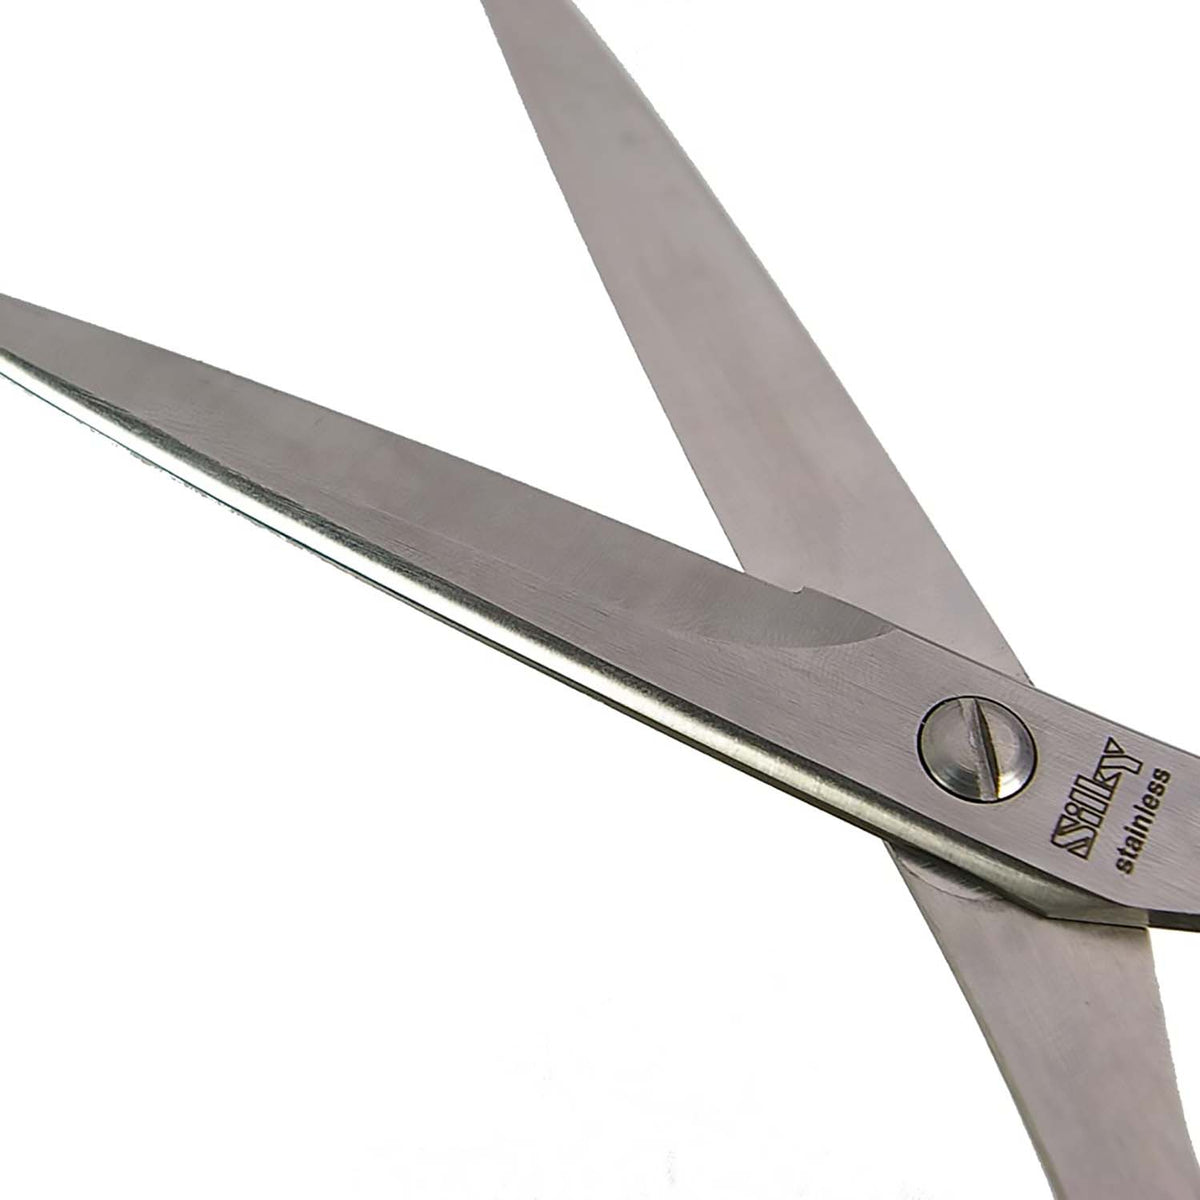 Marusho SILKY Stainless Steel Office Scissors